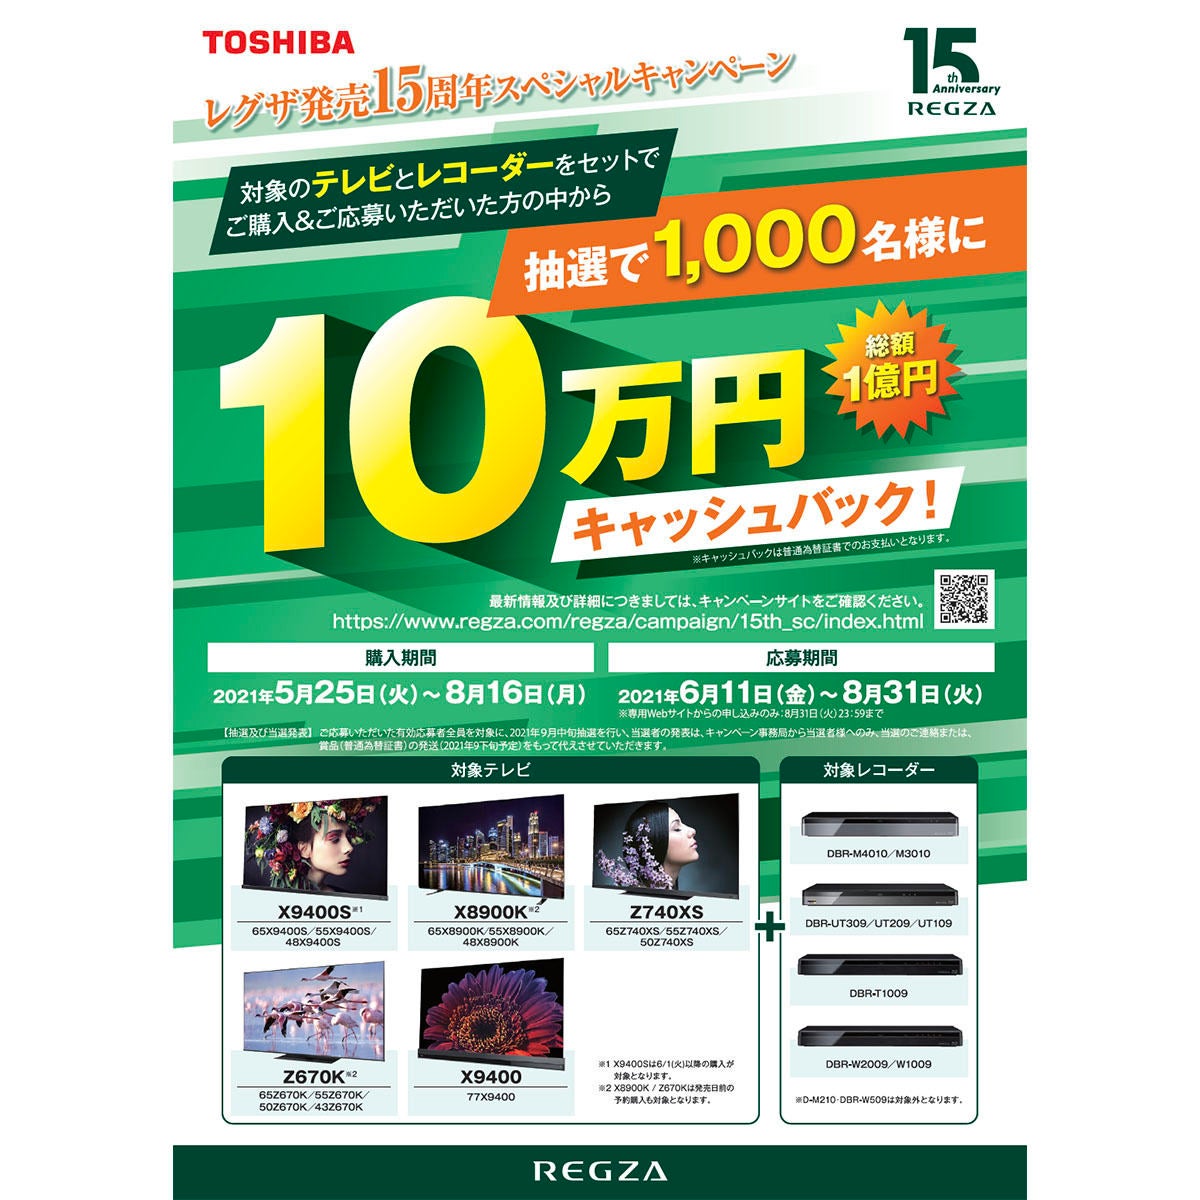 REGZA 4Kテレビ+レコーダ購入で10万円還元。抽選で1,000人に | マイナビニュース